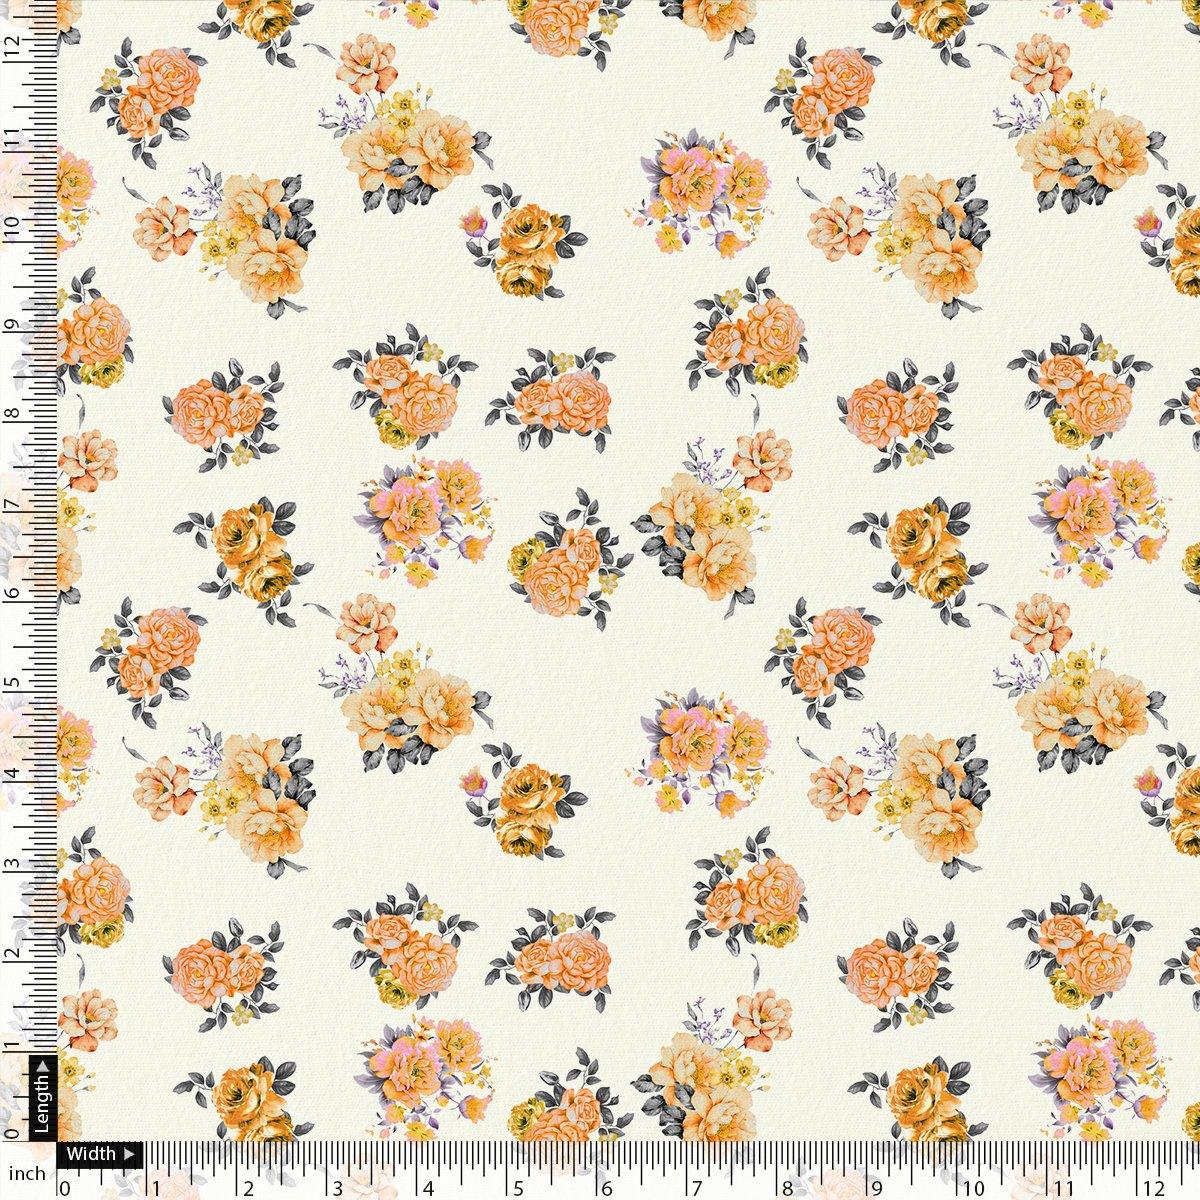 Yellow Lonicera Grey Leafs Digital Printed Fabric - Upada Silk - FAB VOGUE Studio®